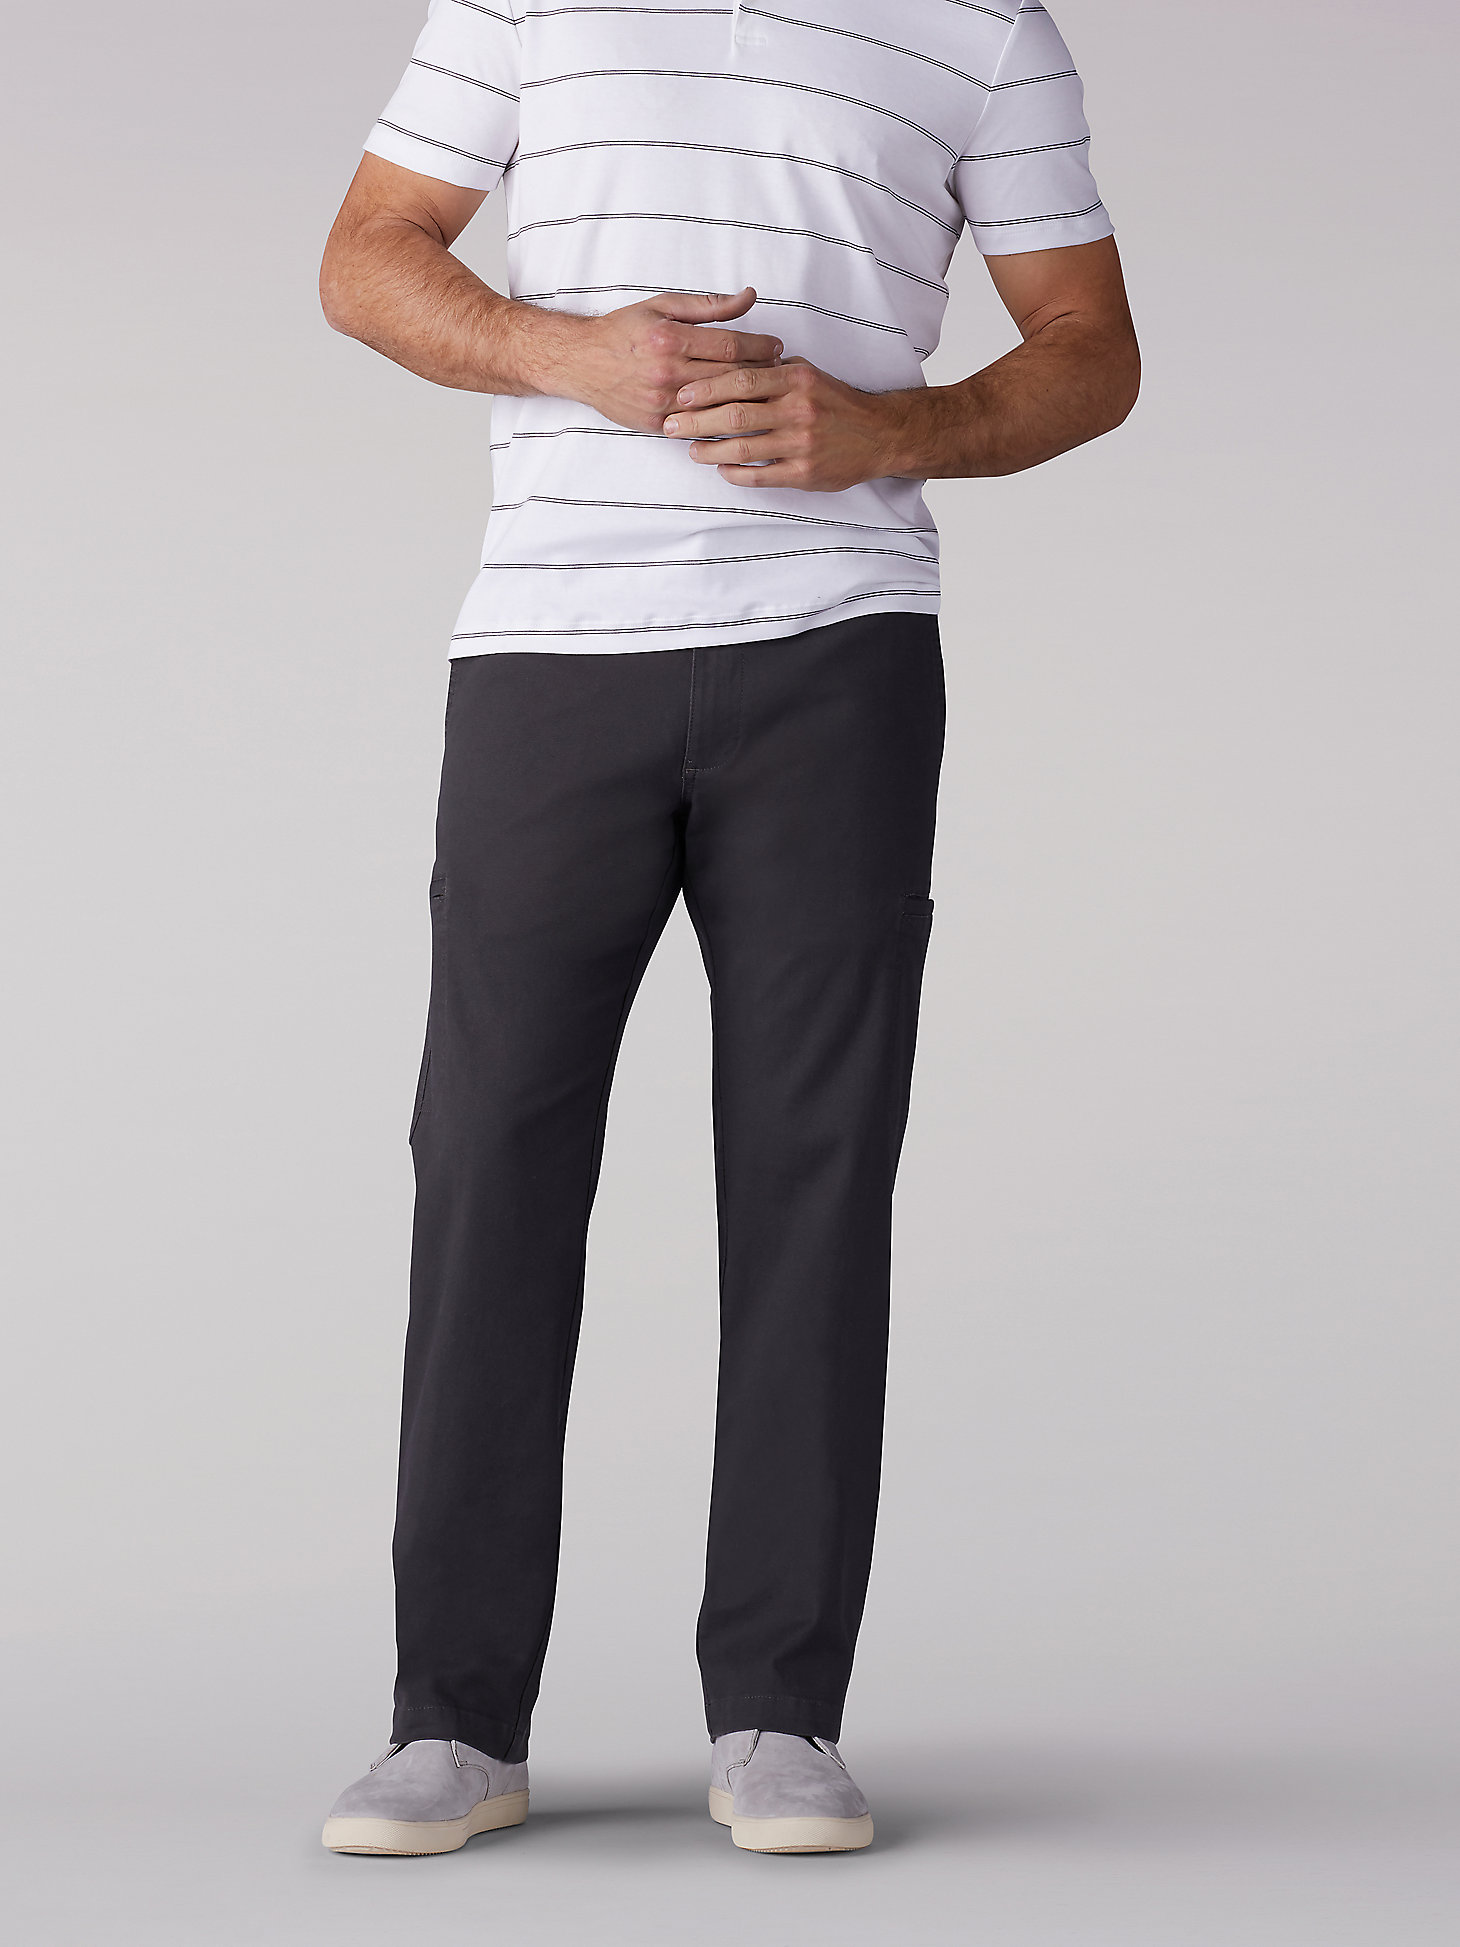 Lee slacks discount 98% Gray MEN FASHION Trousers Corduroy 